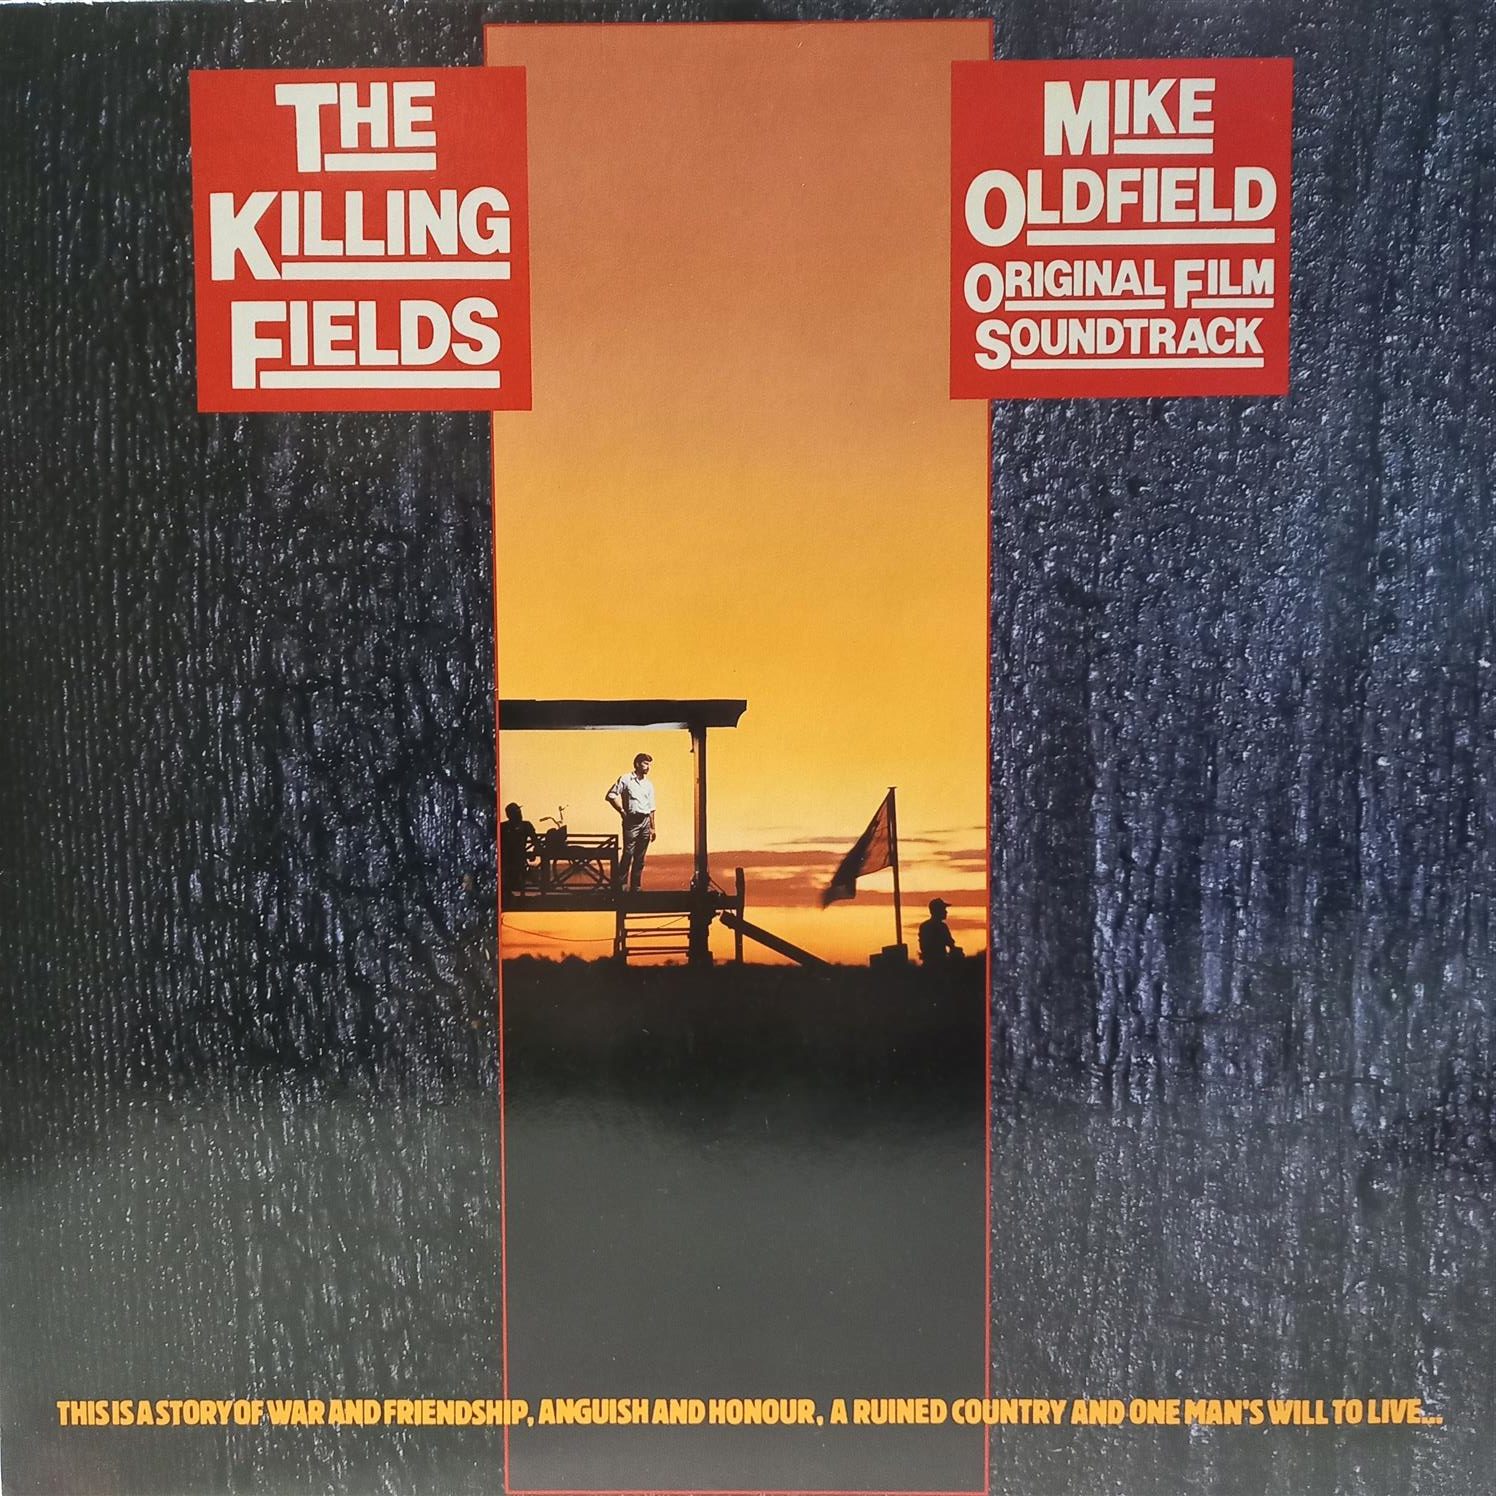 MIKE OLDFIELD – THE KILLING FIELDS ON